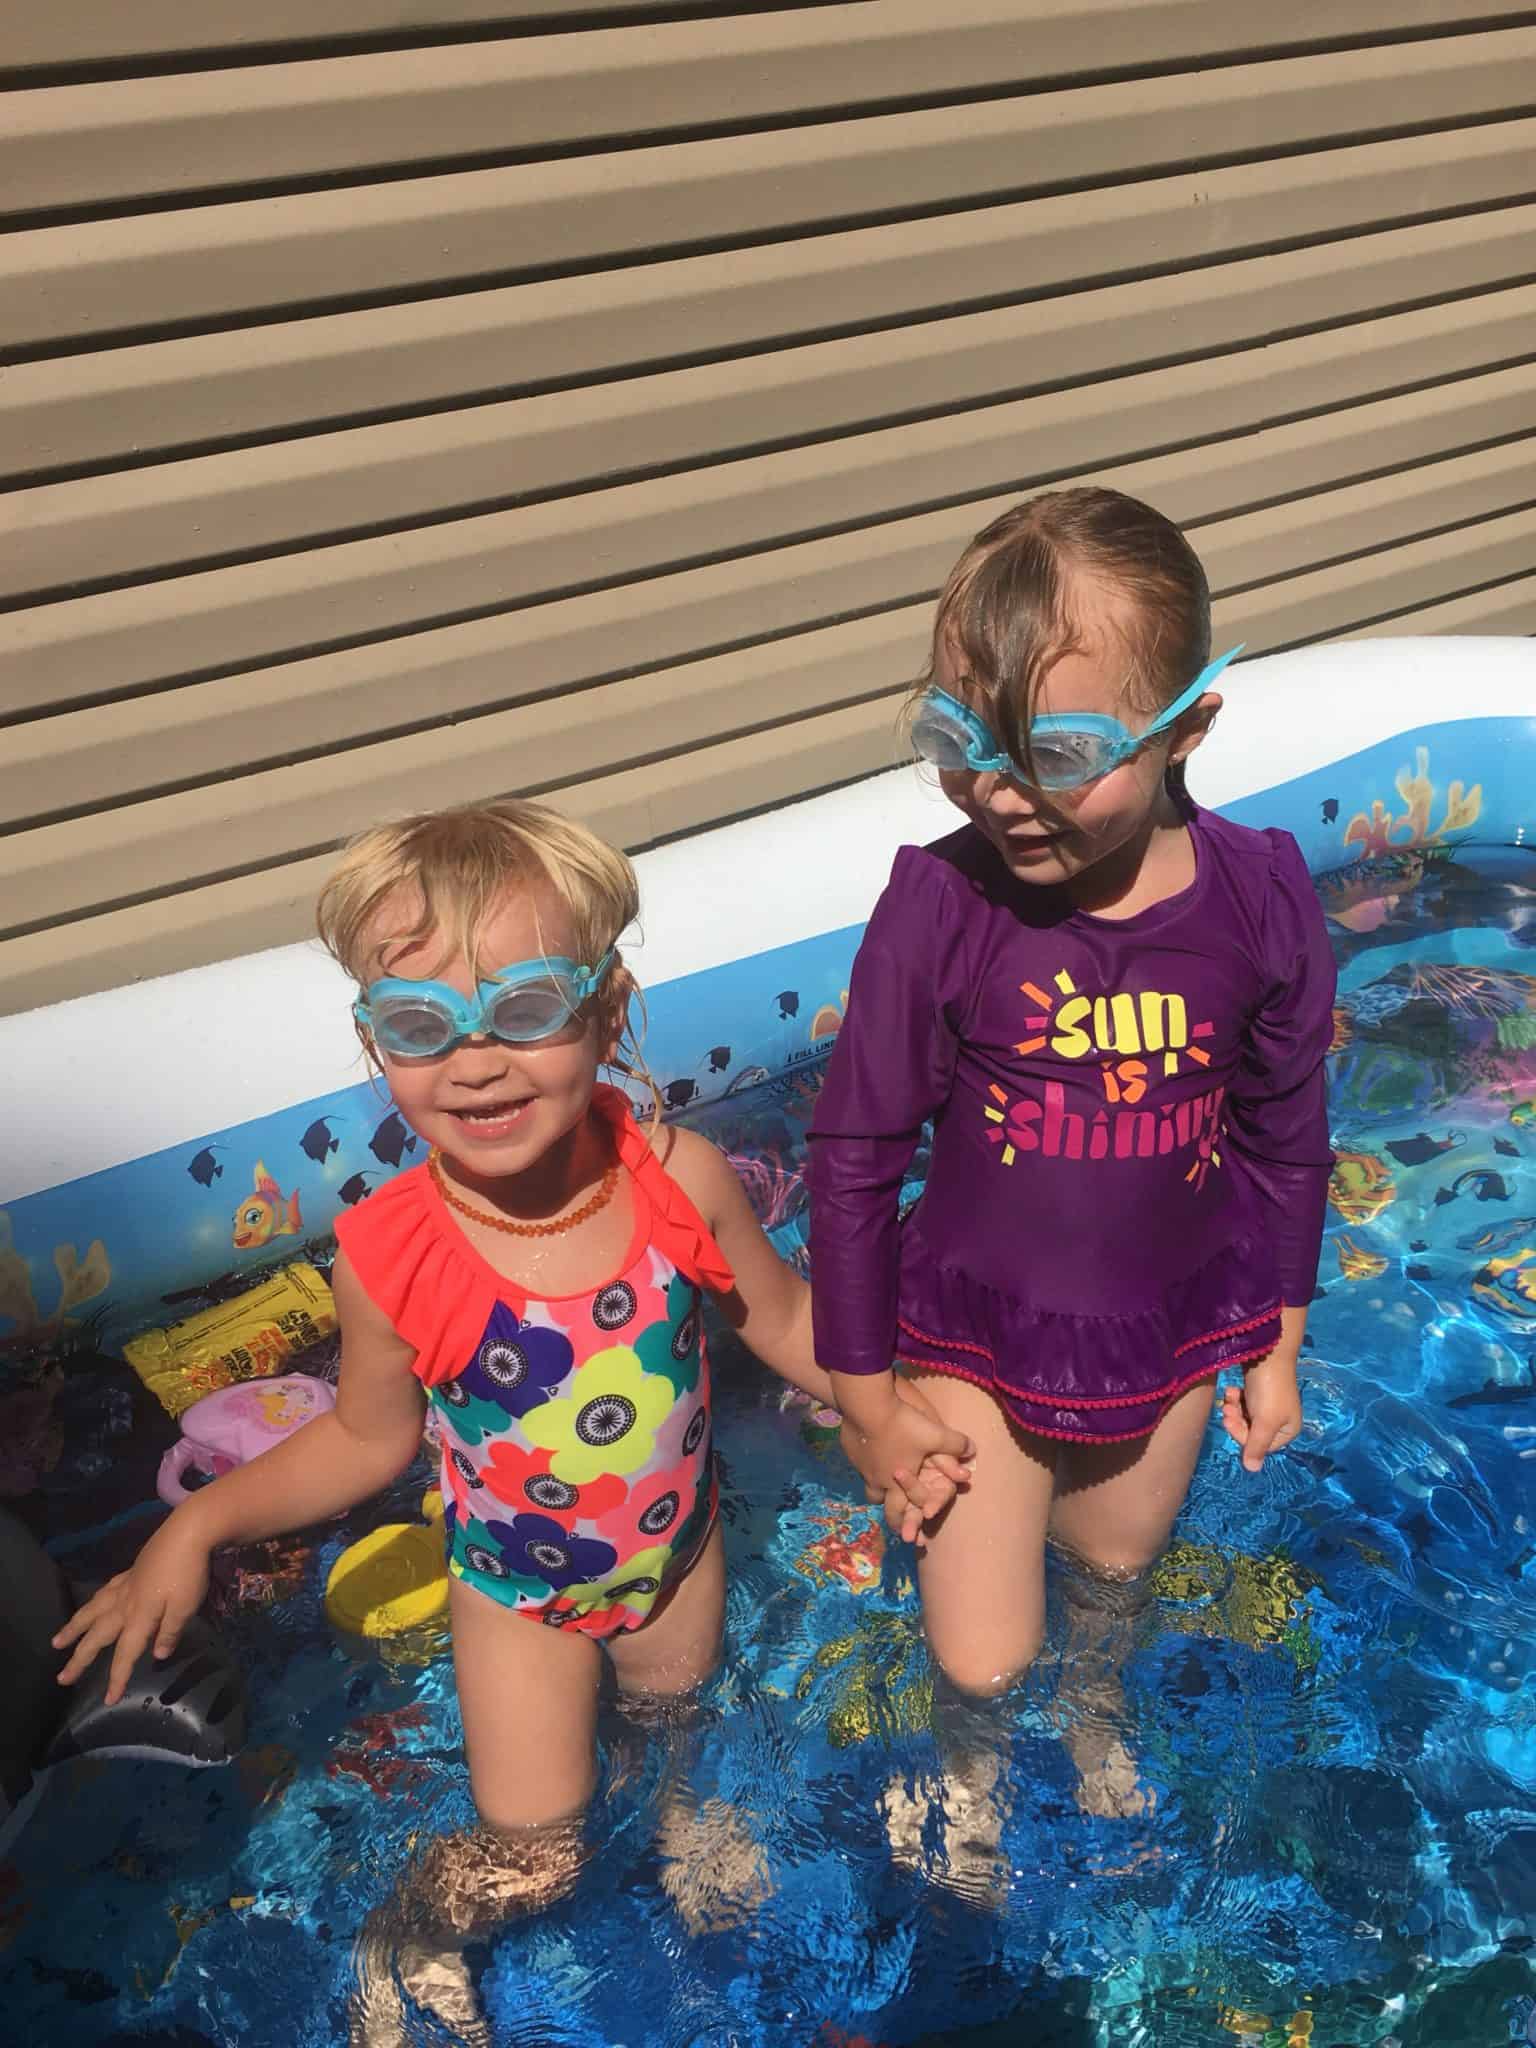 kids playing in kiddie pool wearing sunscreen